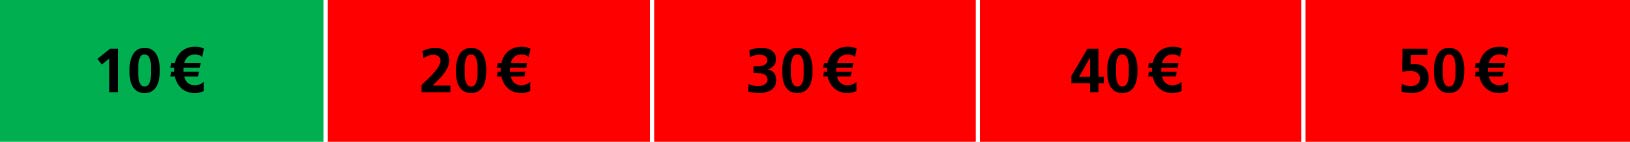 50er 10 Euro